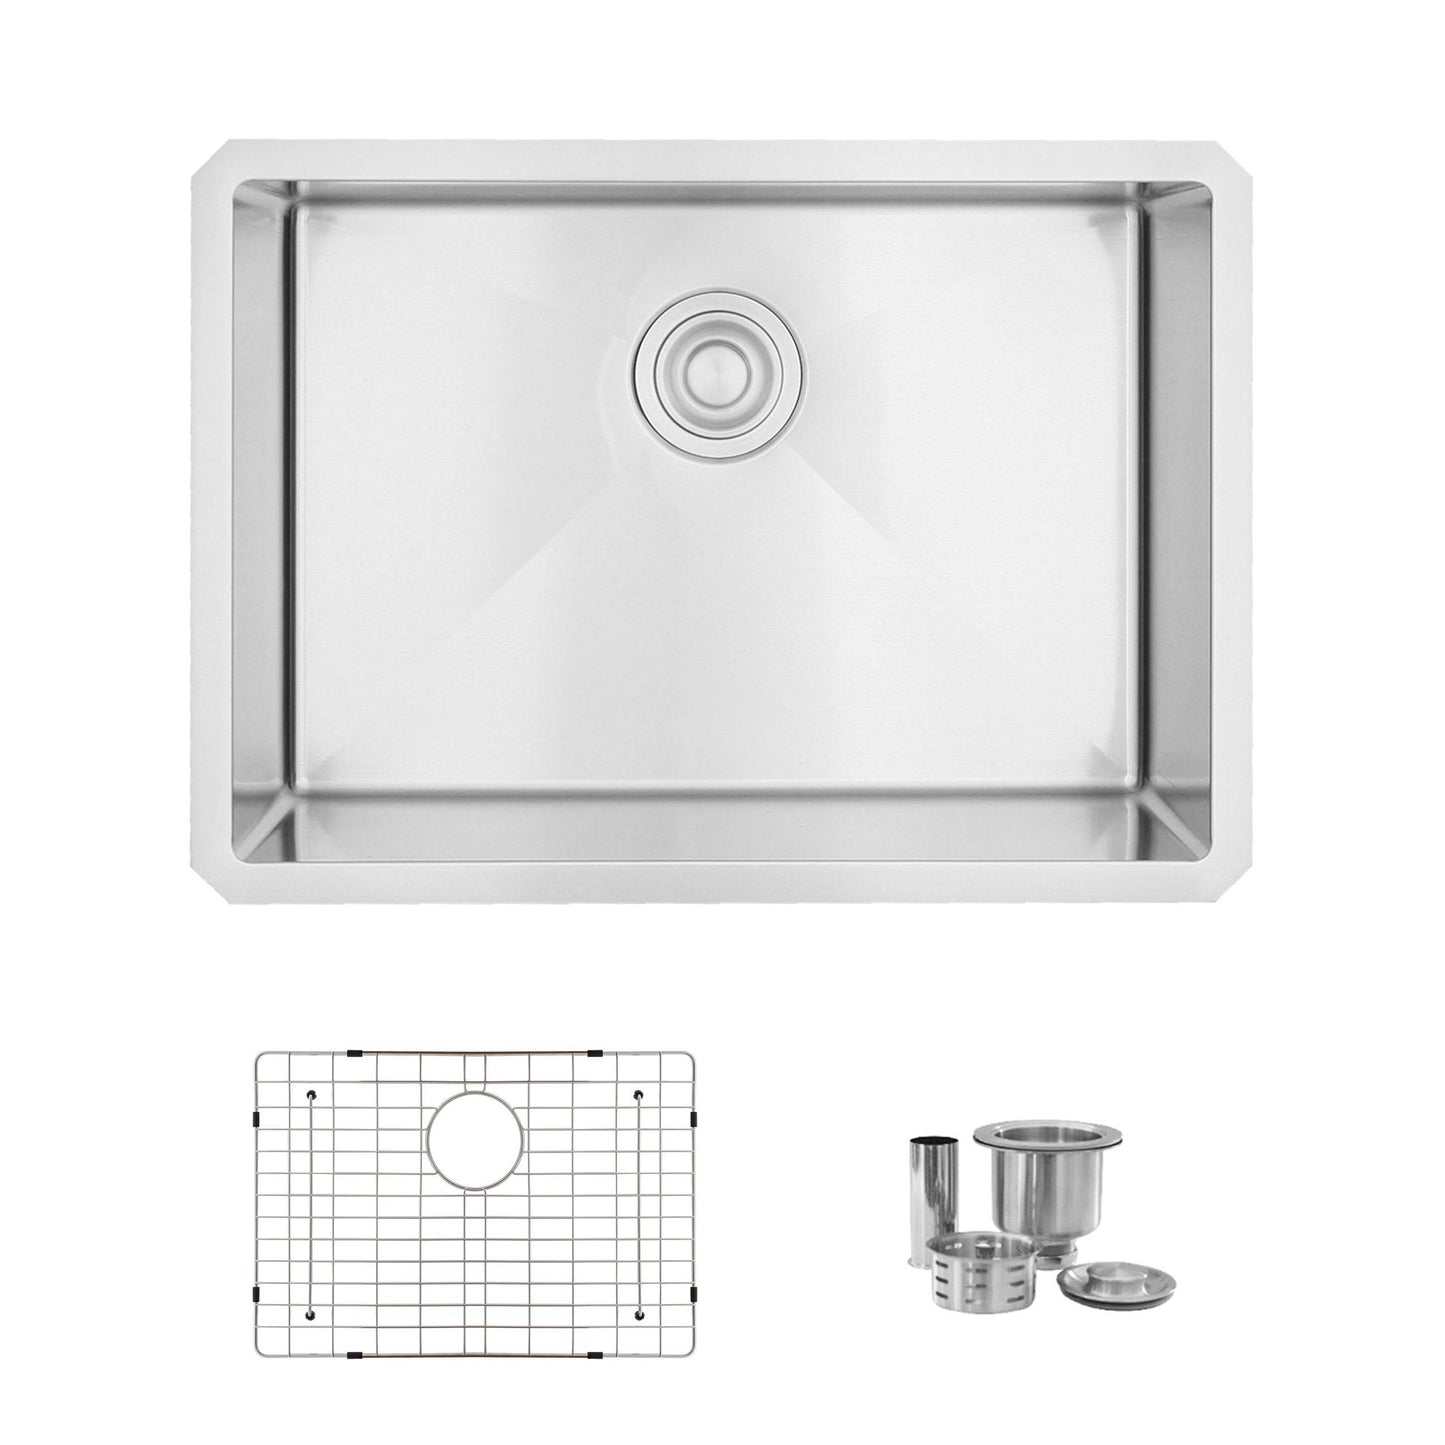 Stylish Teal 25" x 18" Single Bowl Undermount Stainless Steel Kitchen Sink S-312XG